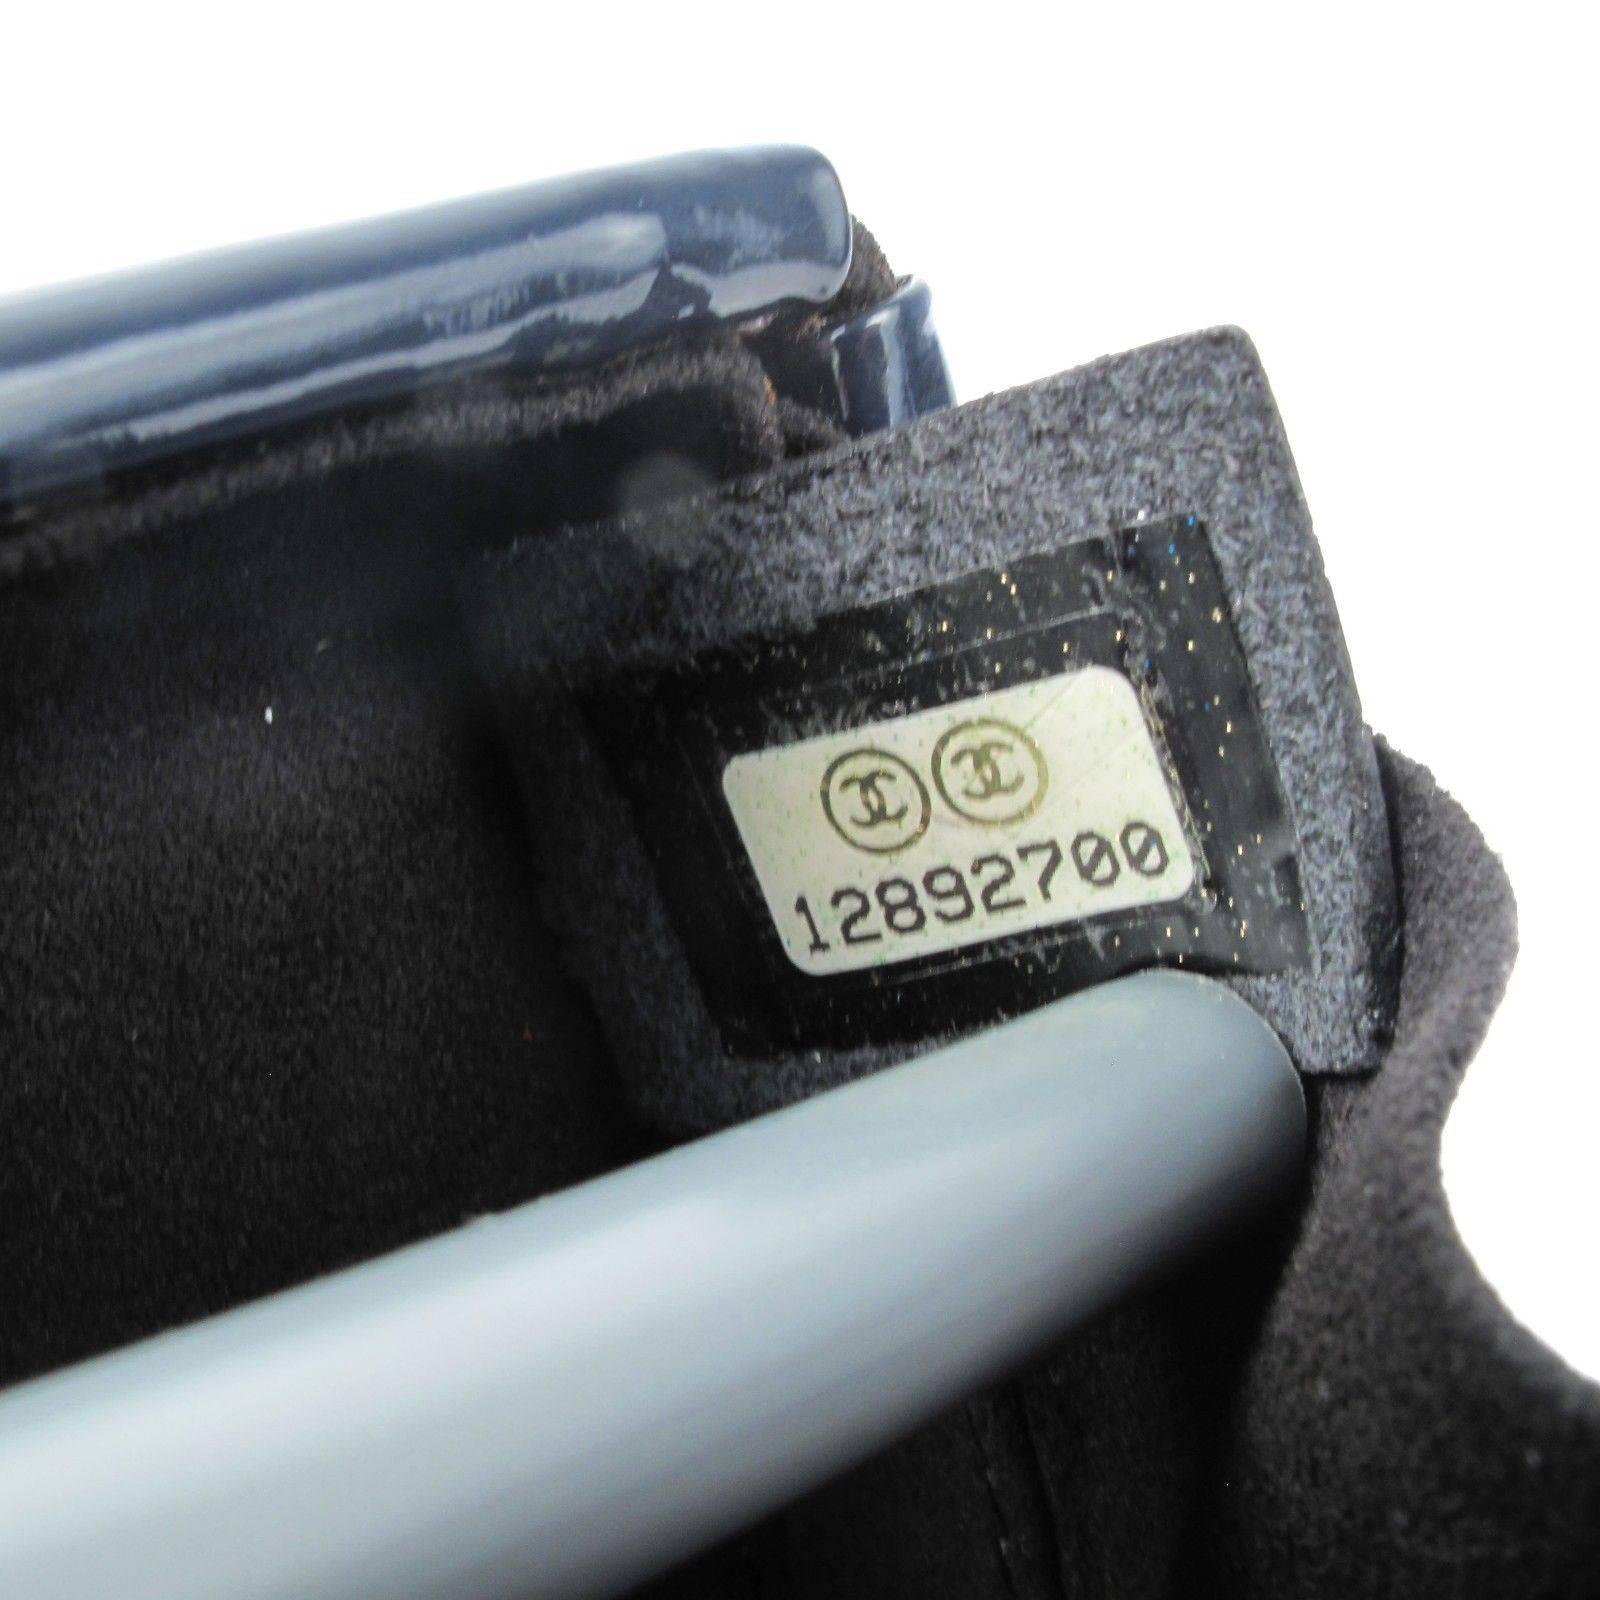 Chanel Clutch Box - Wristlet Blue & Black Leather CC Minaudie Bag Handbag Case 5